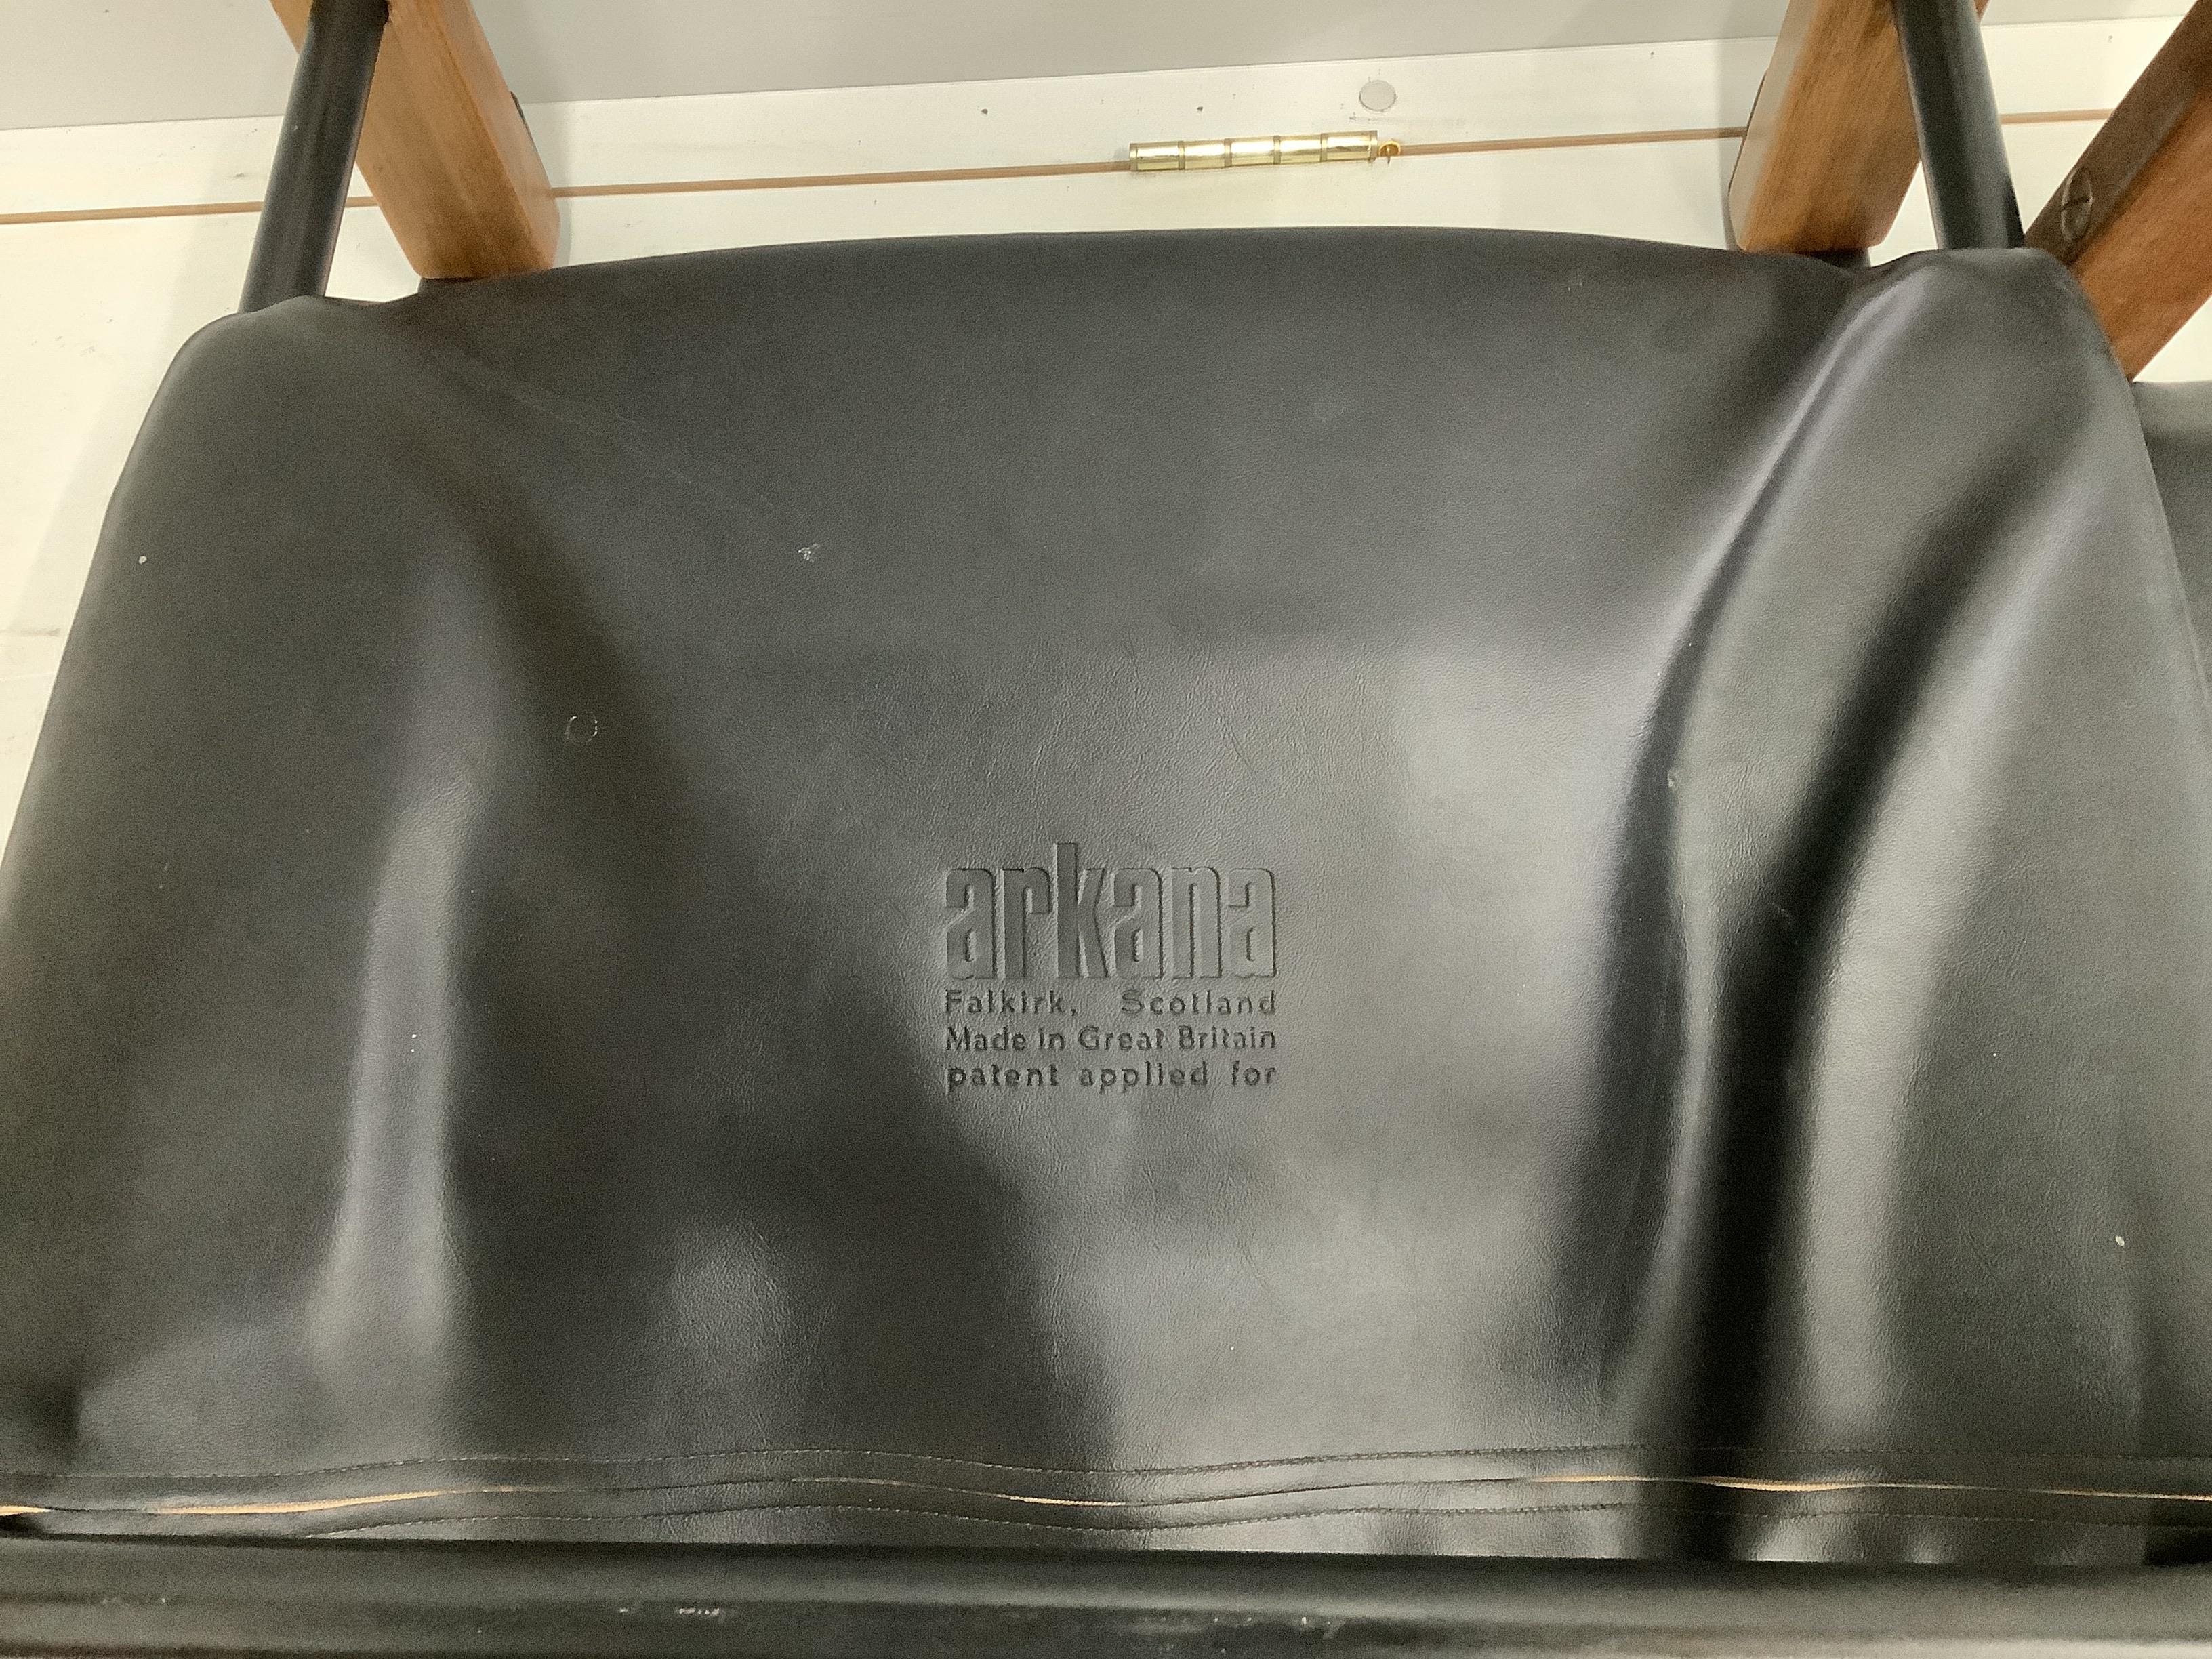 Maurice Burke for Arkana, a black leather and teak safari armchair, width 62cm, depth 60cm, height 72cm and foot stool